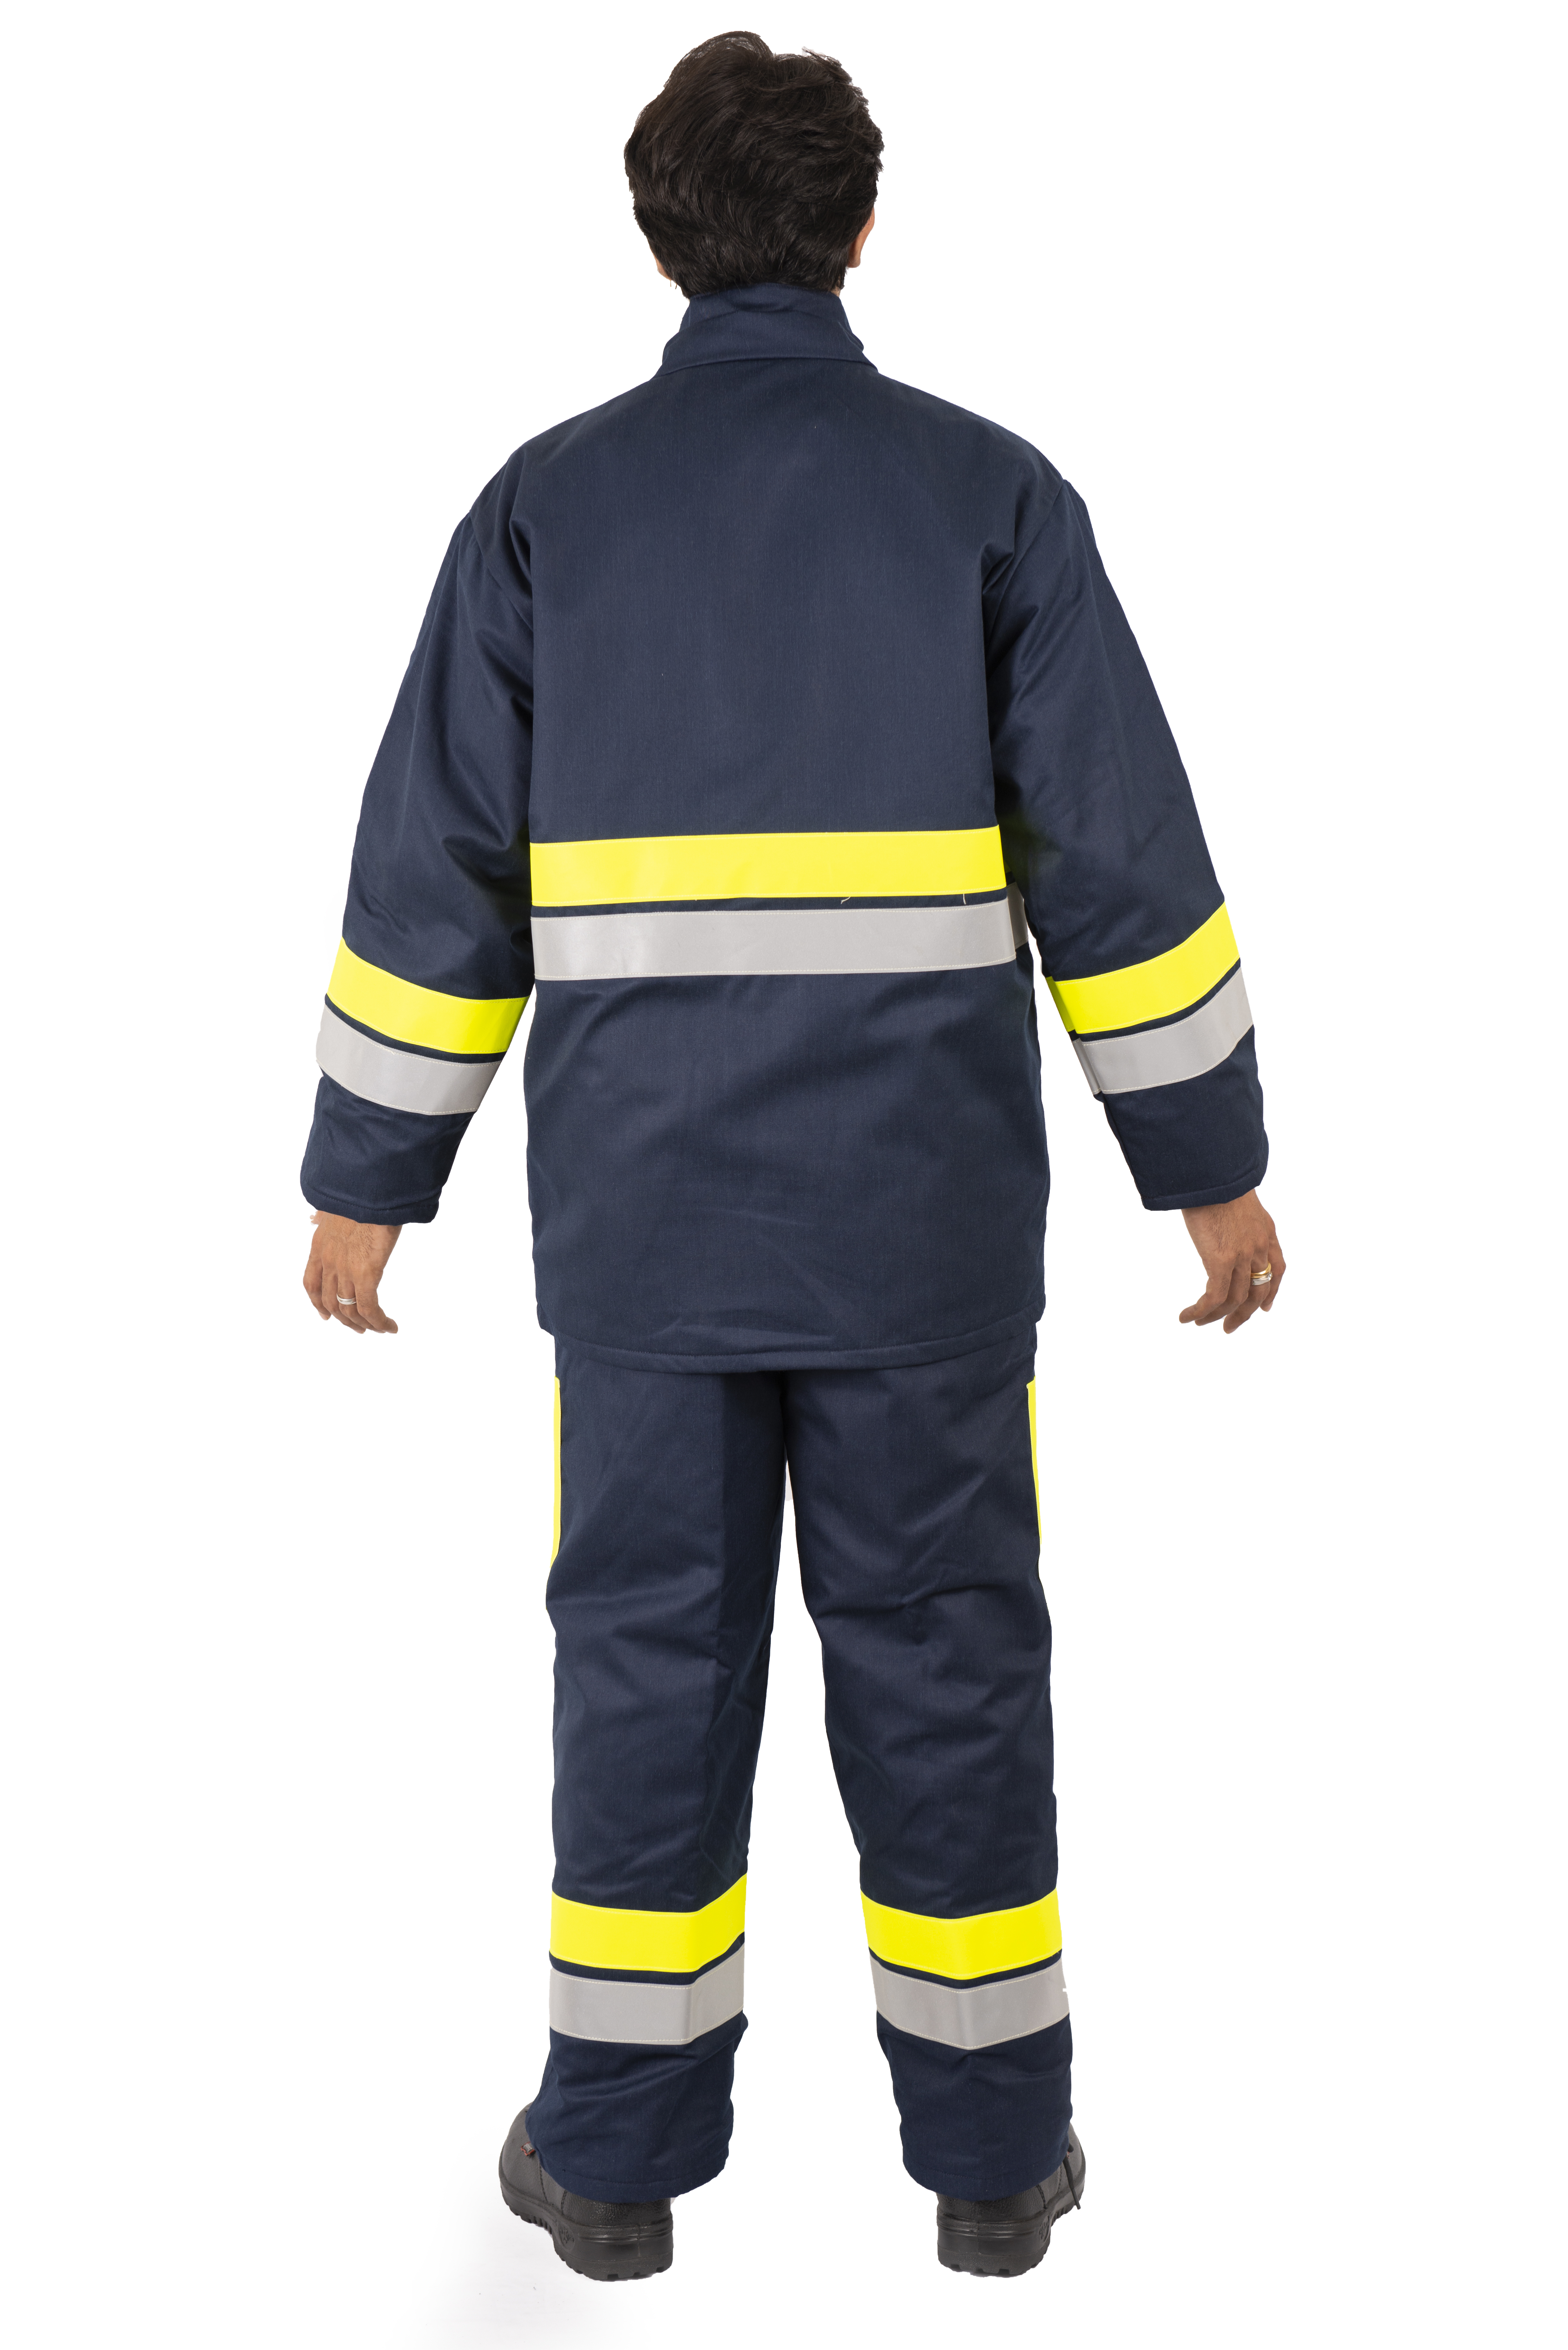 Fire Fighting Suit / Fire Proximity Suit - NOMEX - ECO - Jacket & Trouser